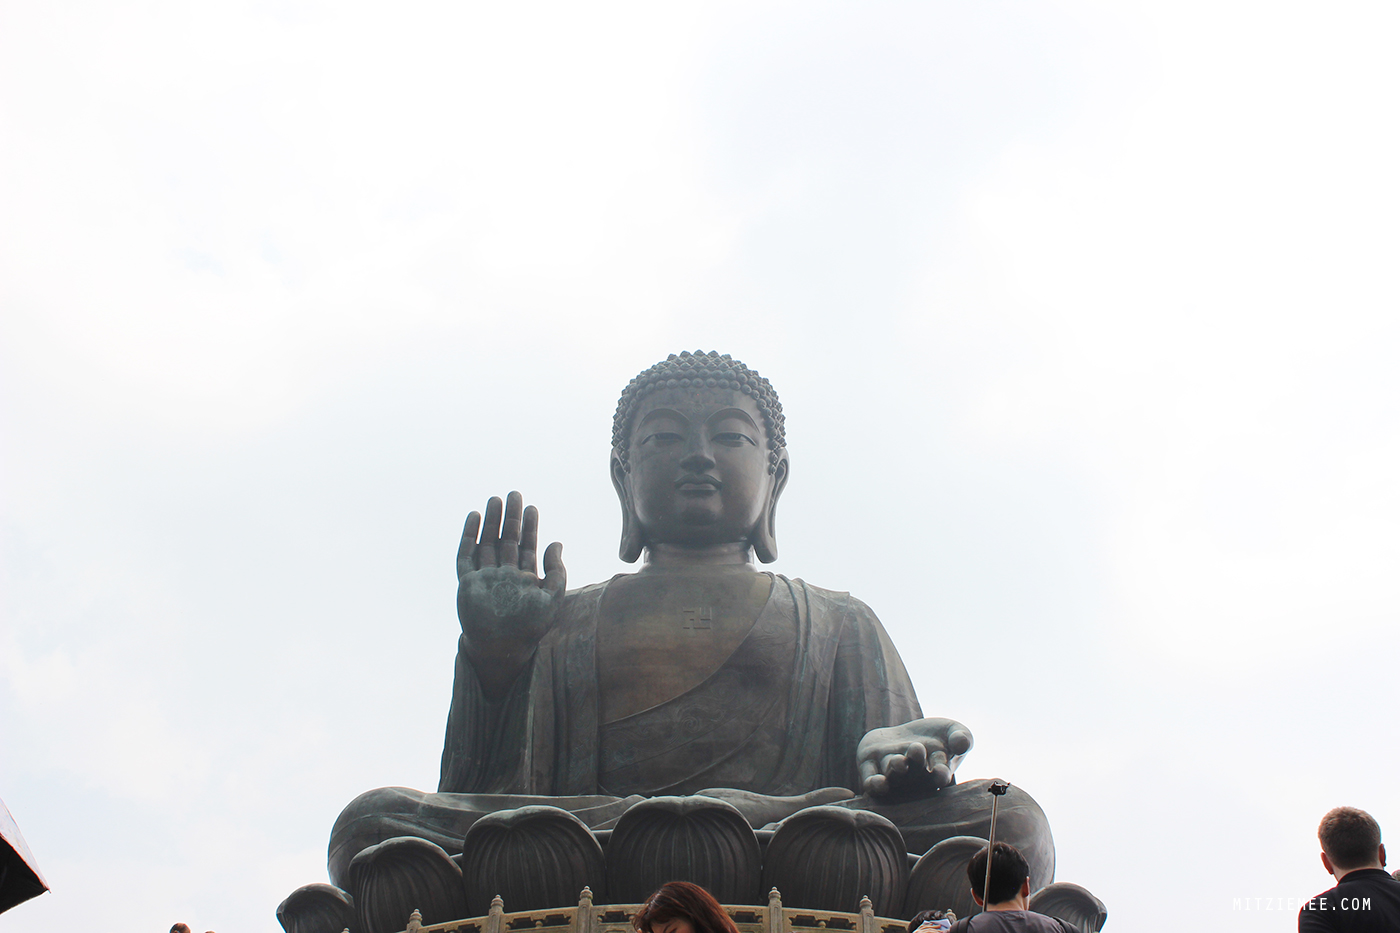 The Big Buddha, Hong Kong